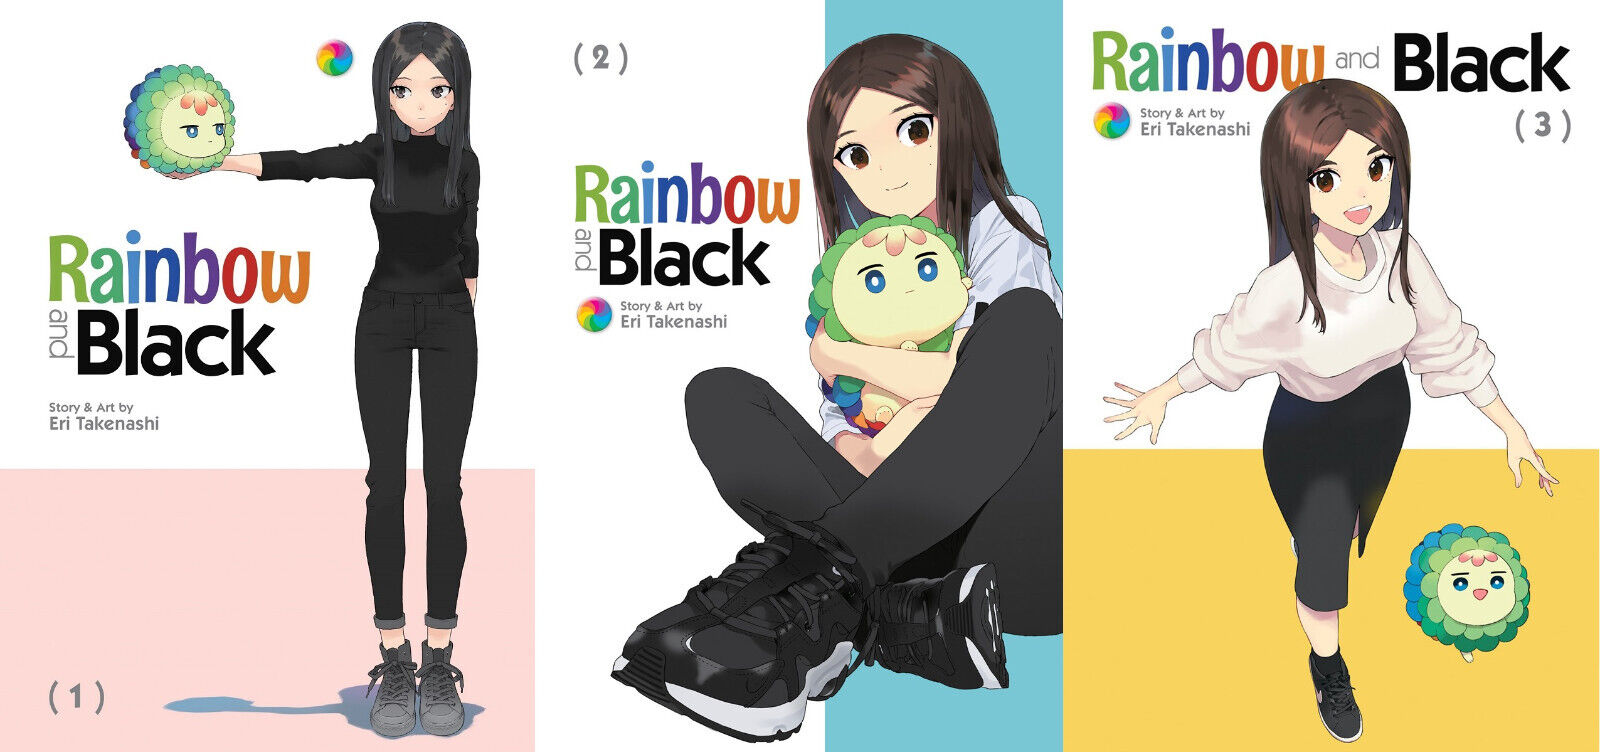 Rainbow and Black Vol 1-3, by Eri Takenashi (Paperback, English) COMPLETE SERIES